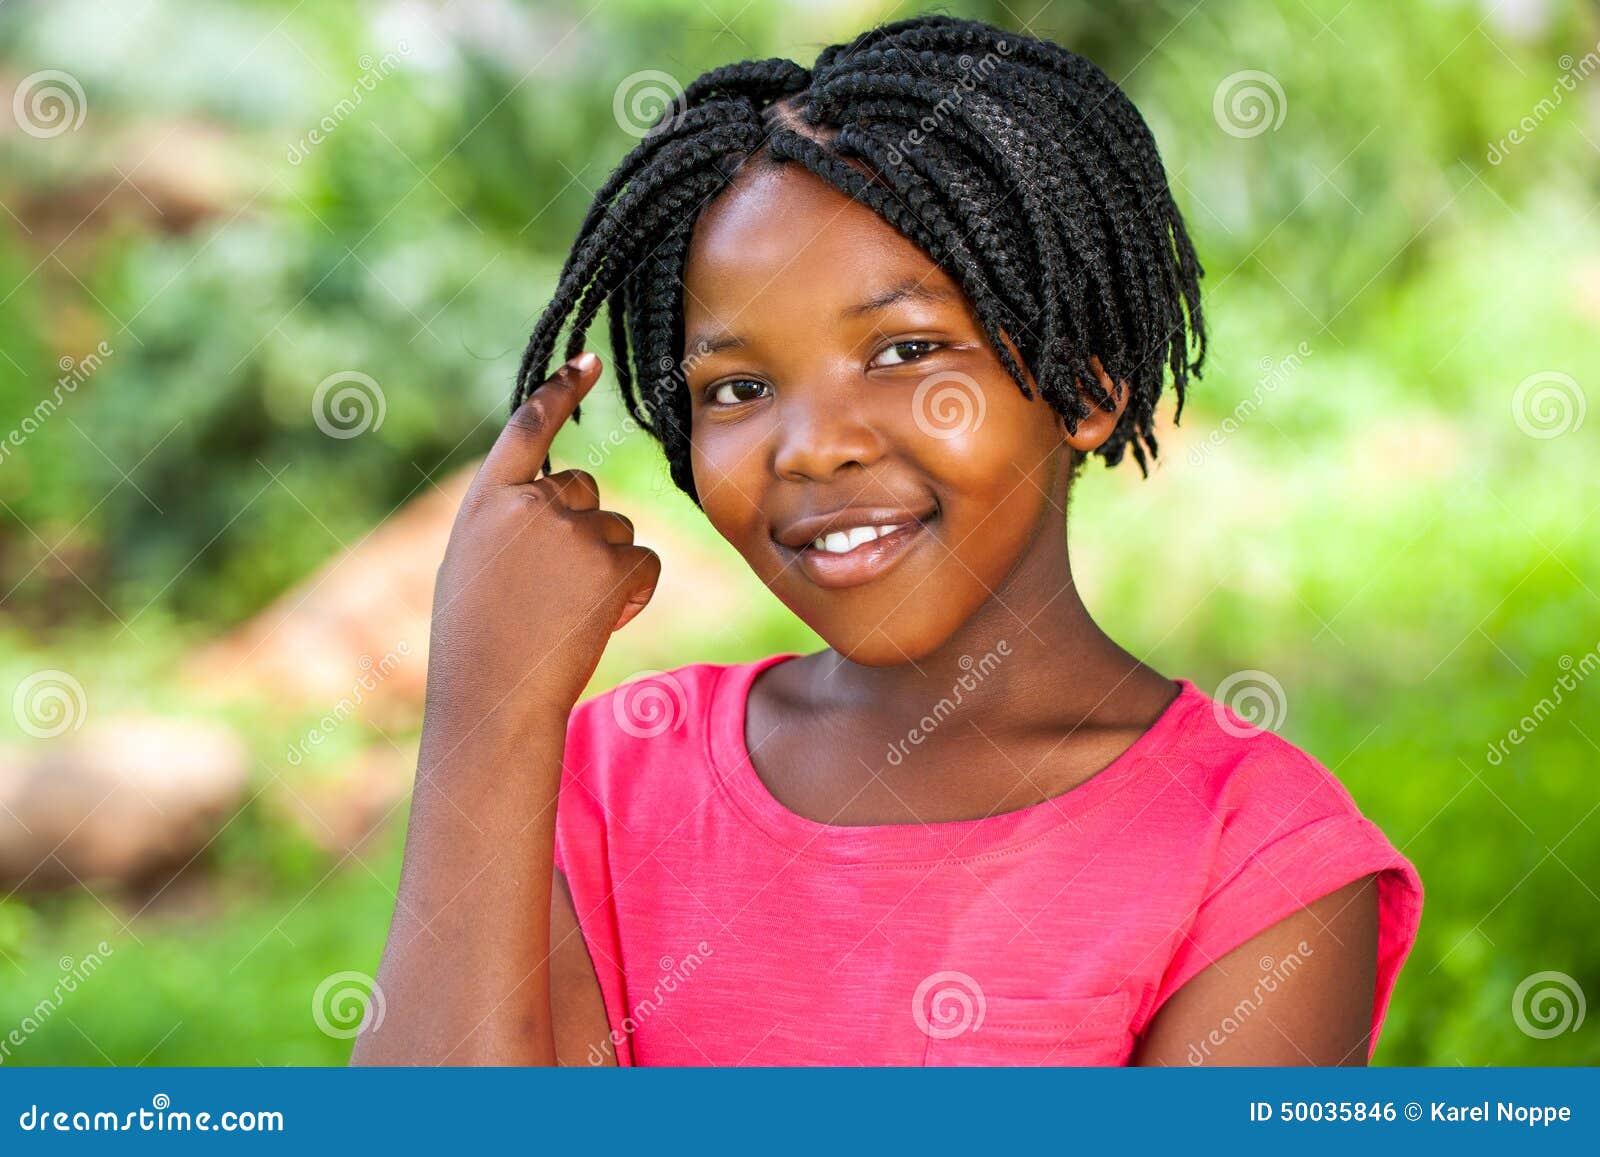 cute african girl showing braided hair.